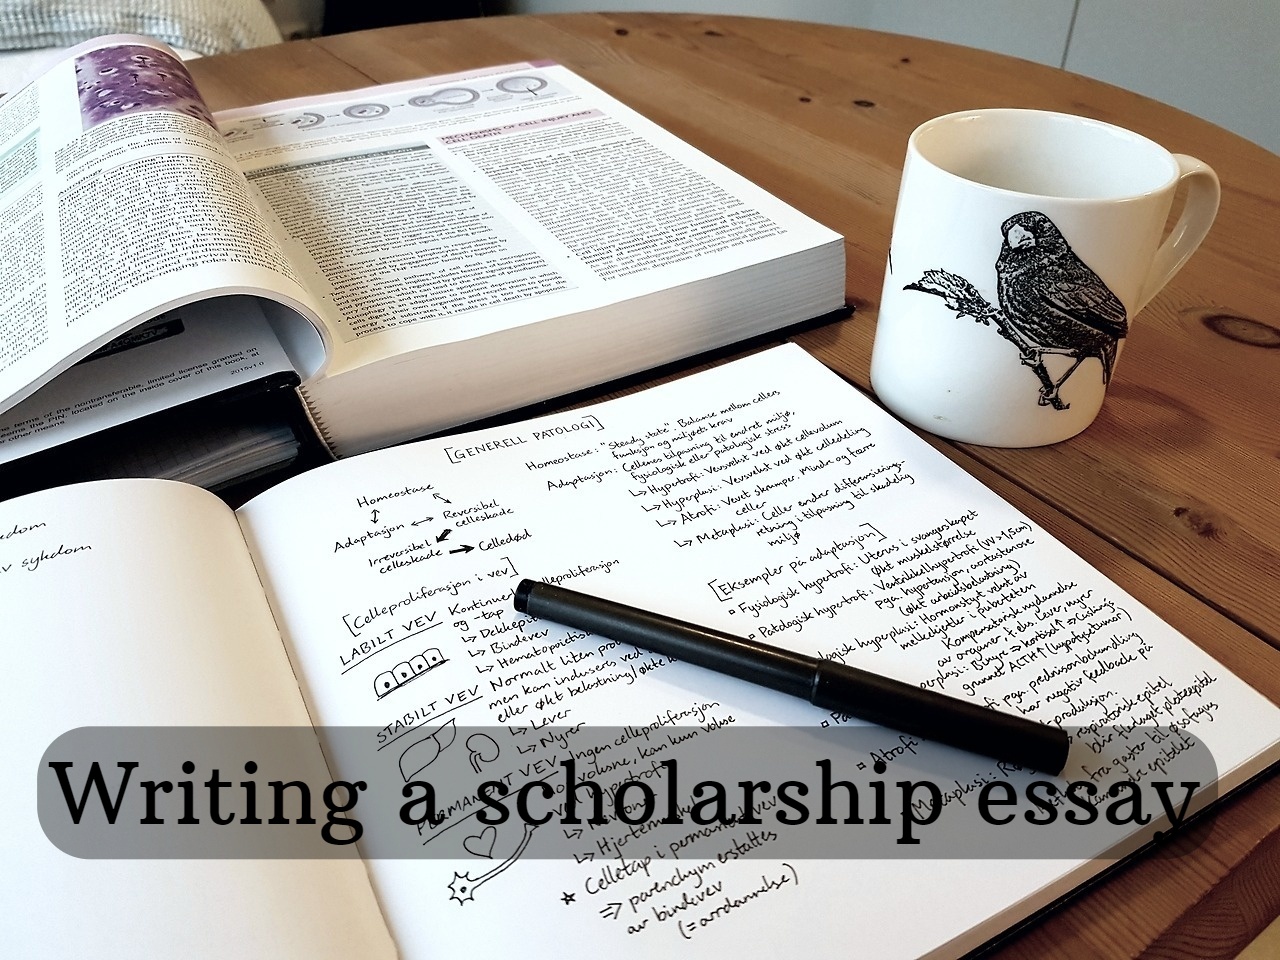 Writing a scholarship essay